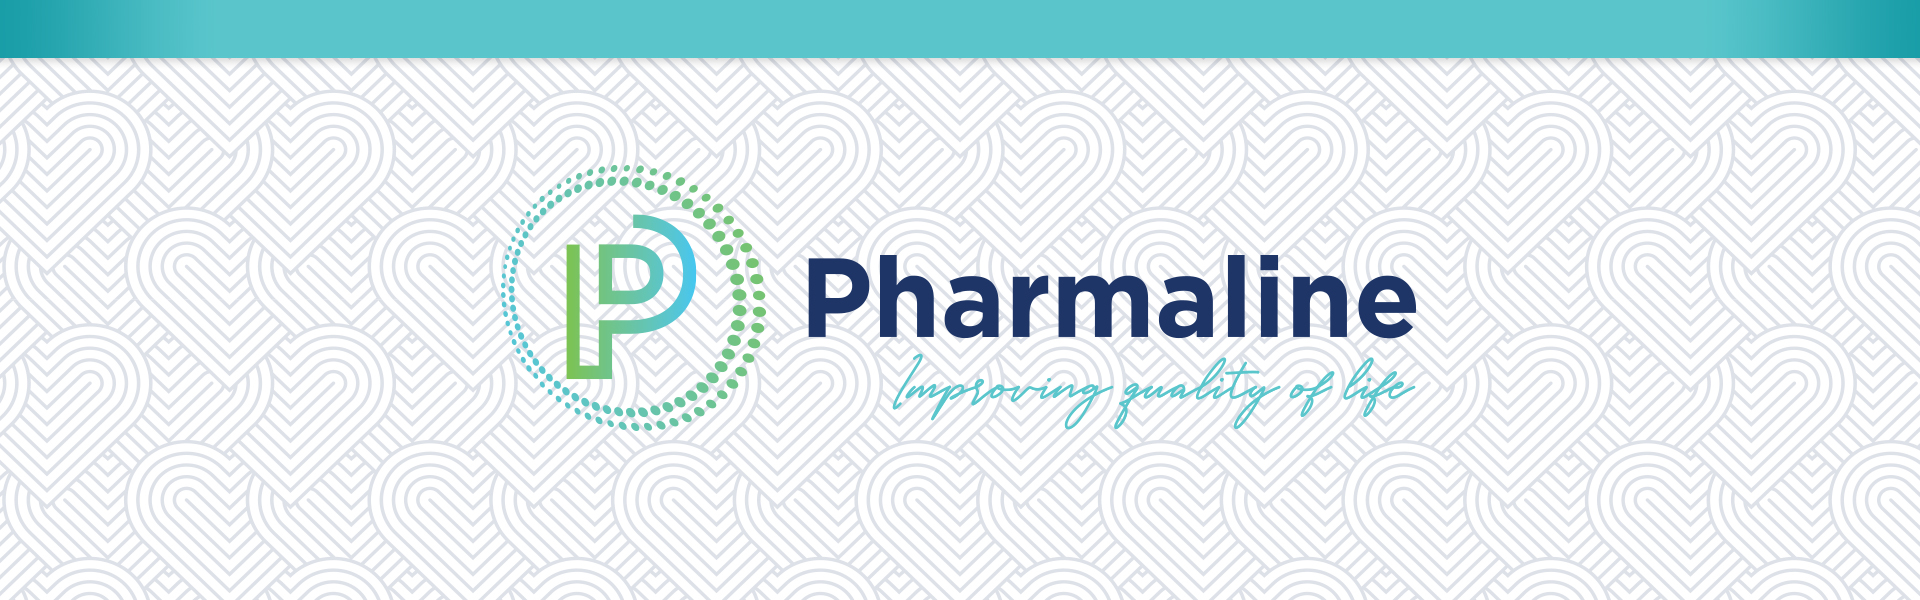 Pharmaline - Malia Group